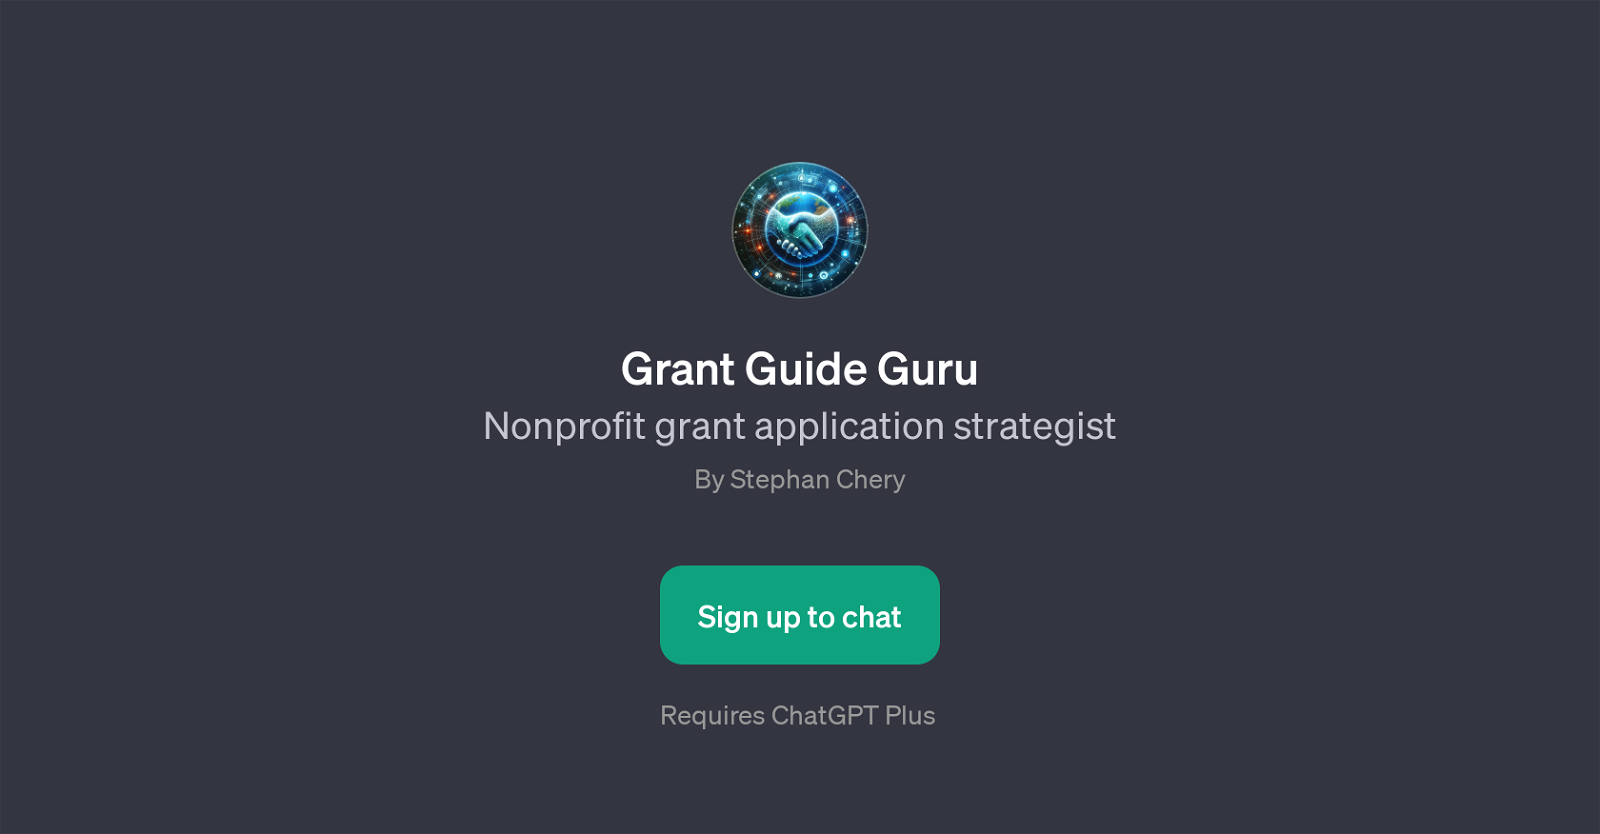 Grant Guide Guru website